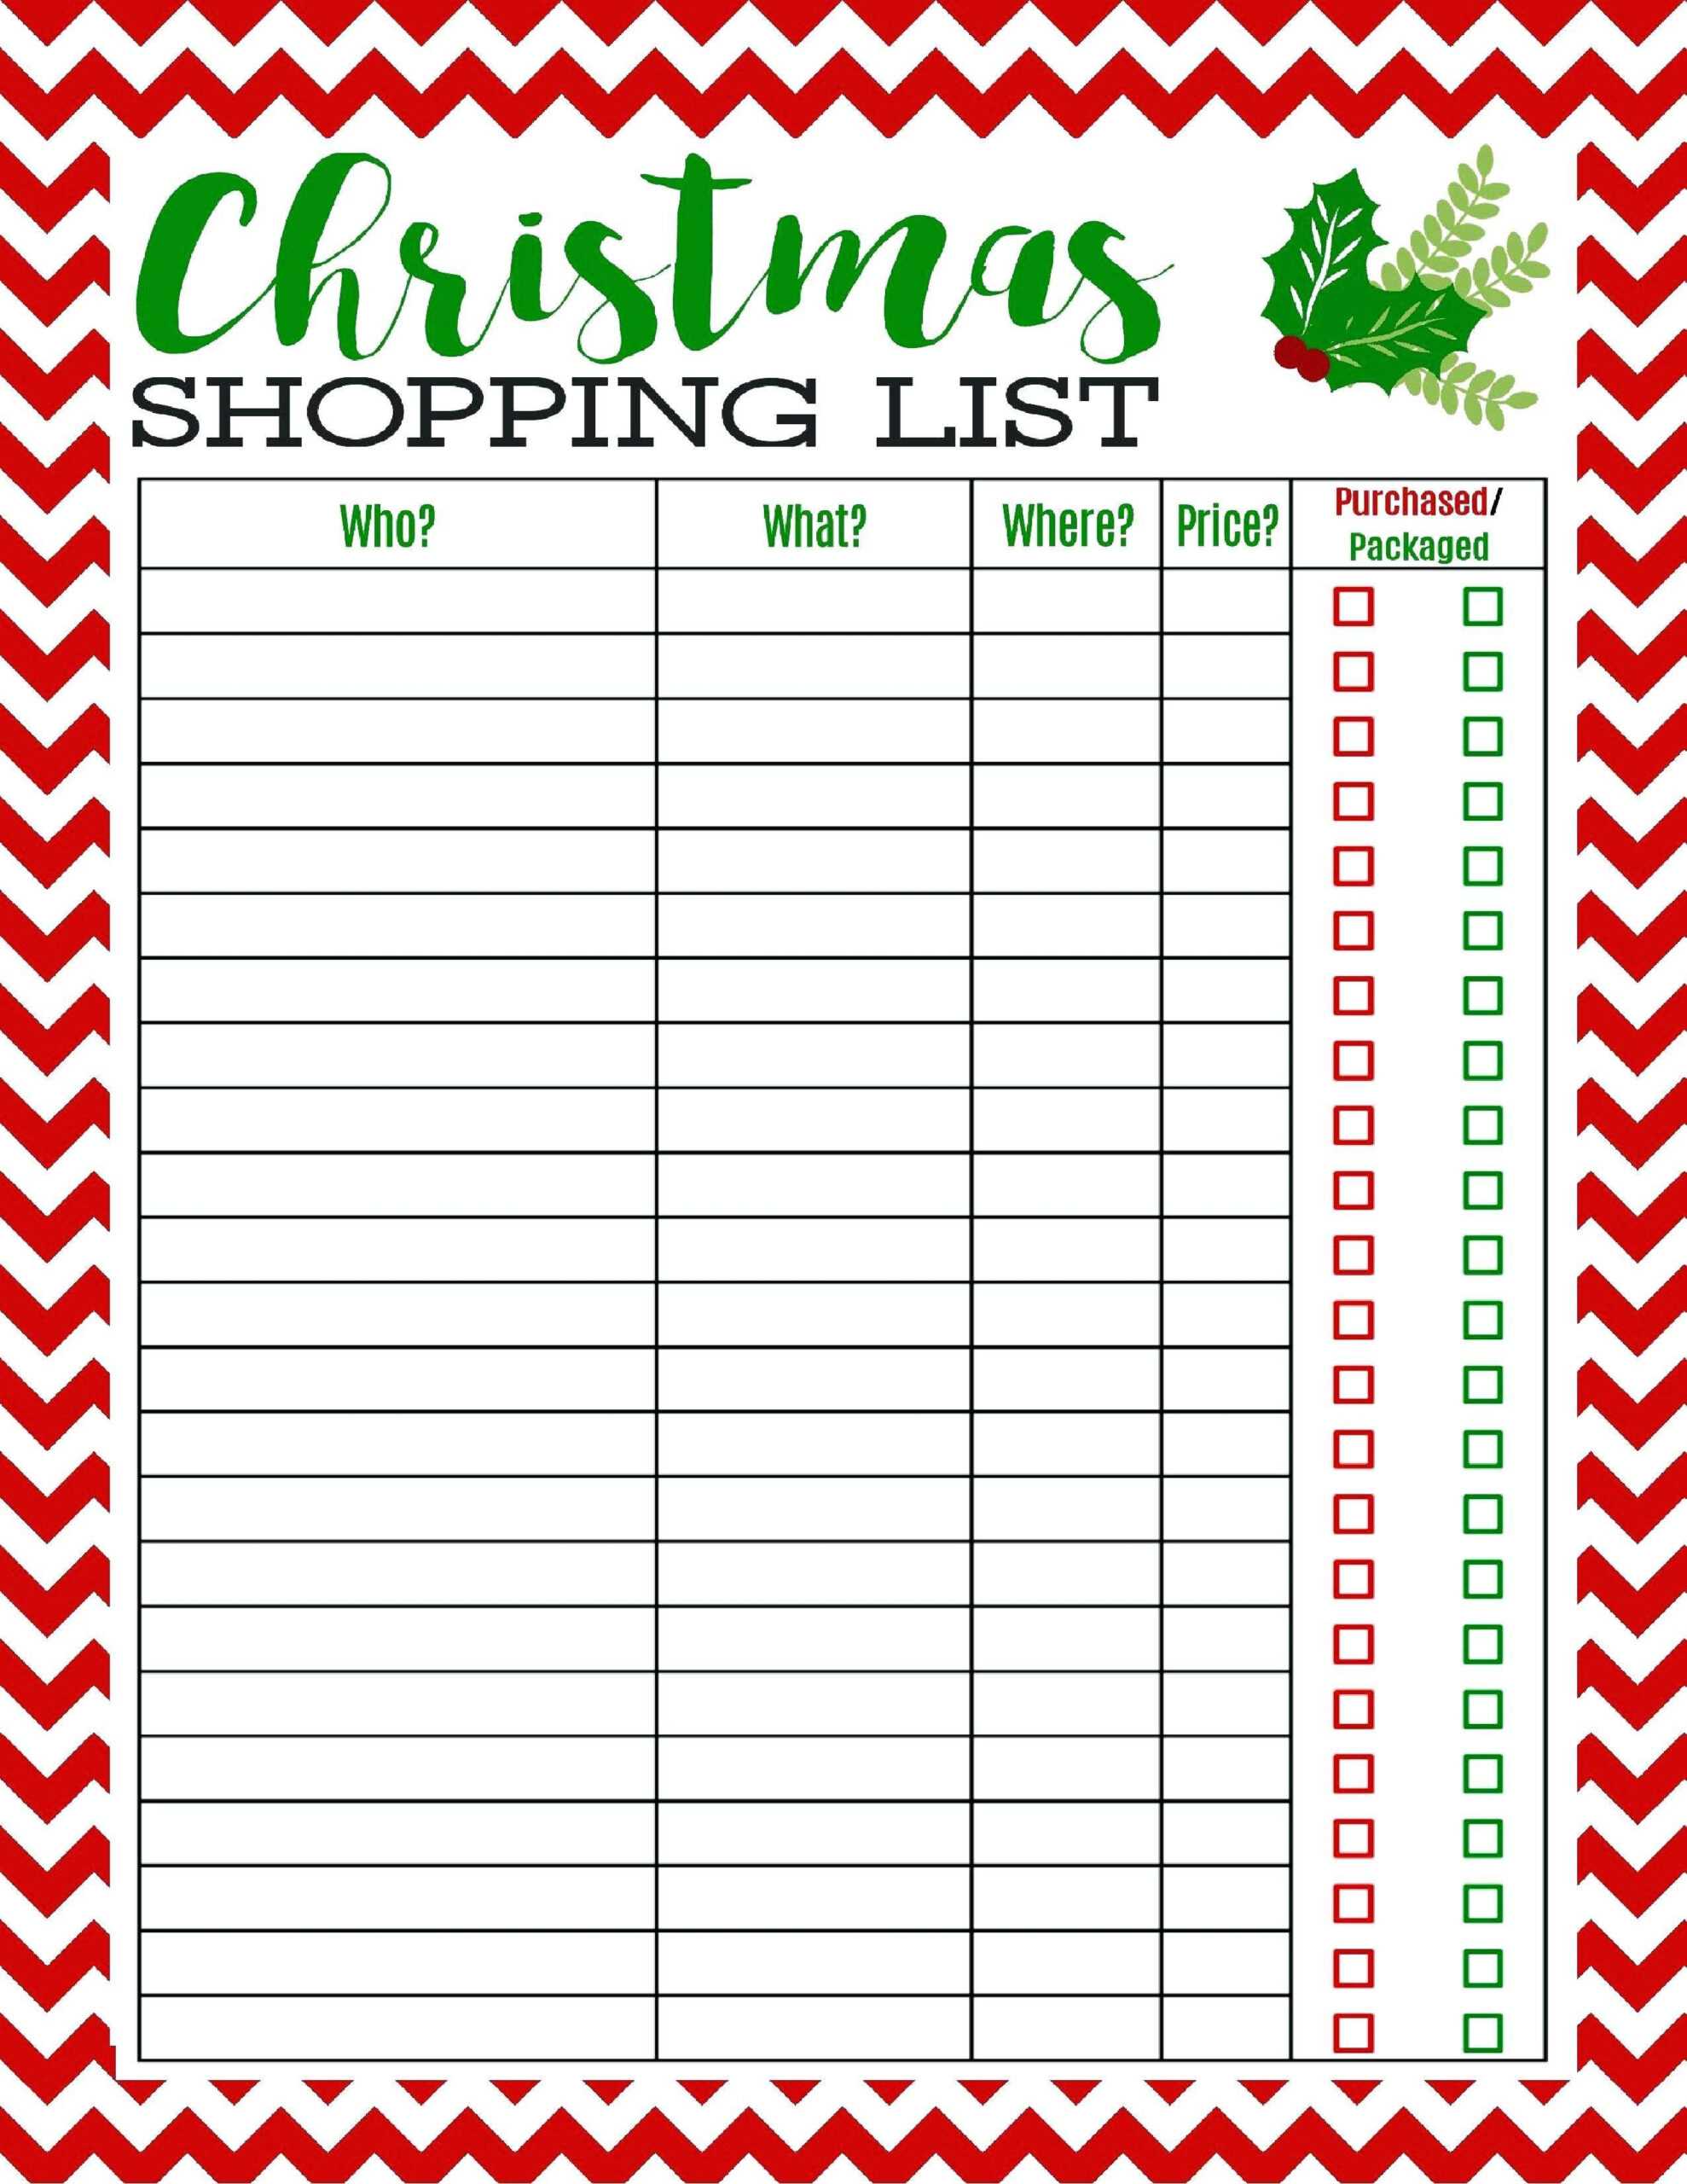 48 Standard Christmas Card List Template Excel Download With With Regard To Christmas Card List Template